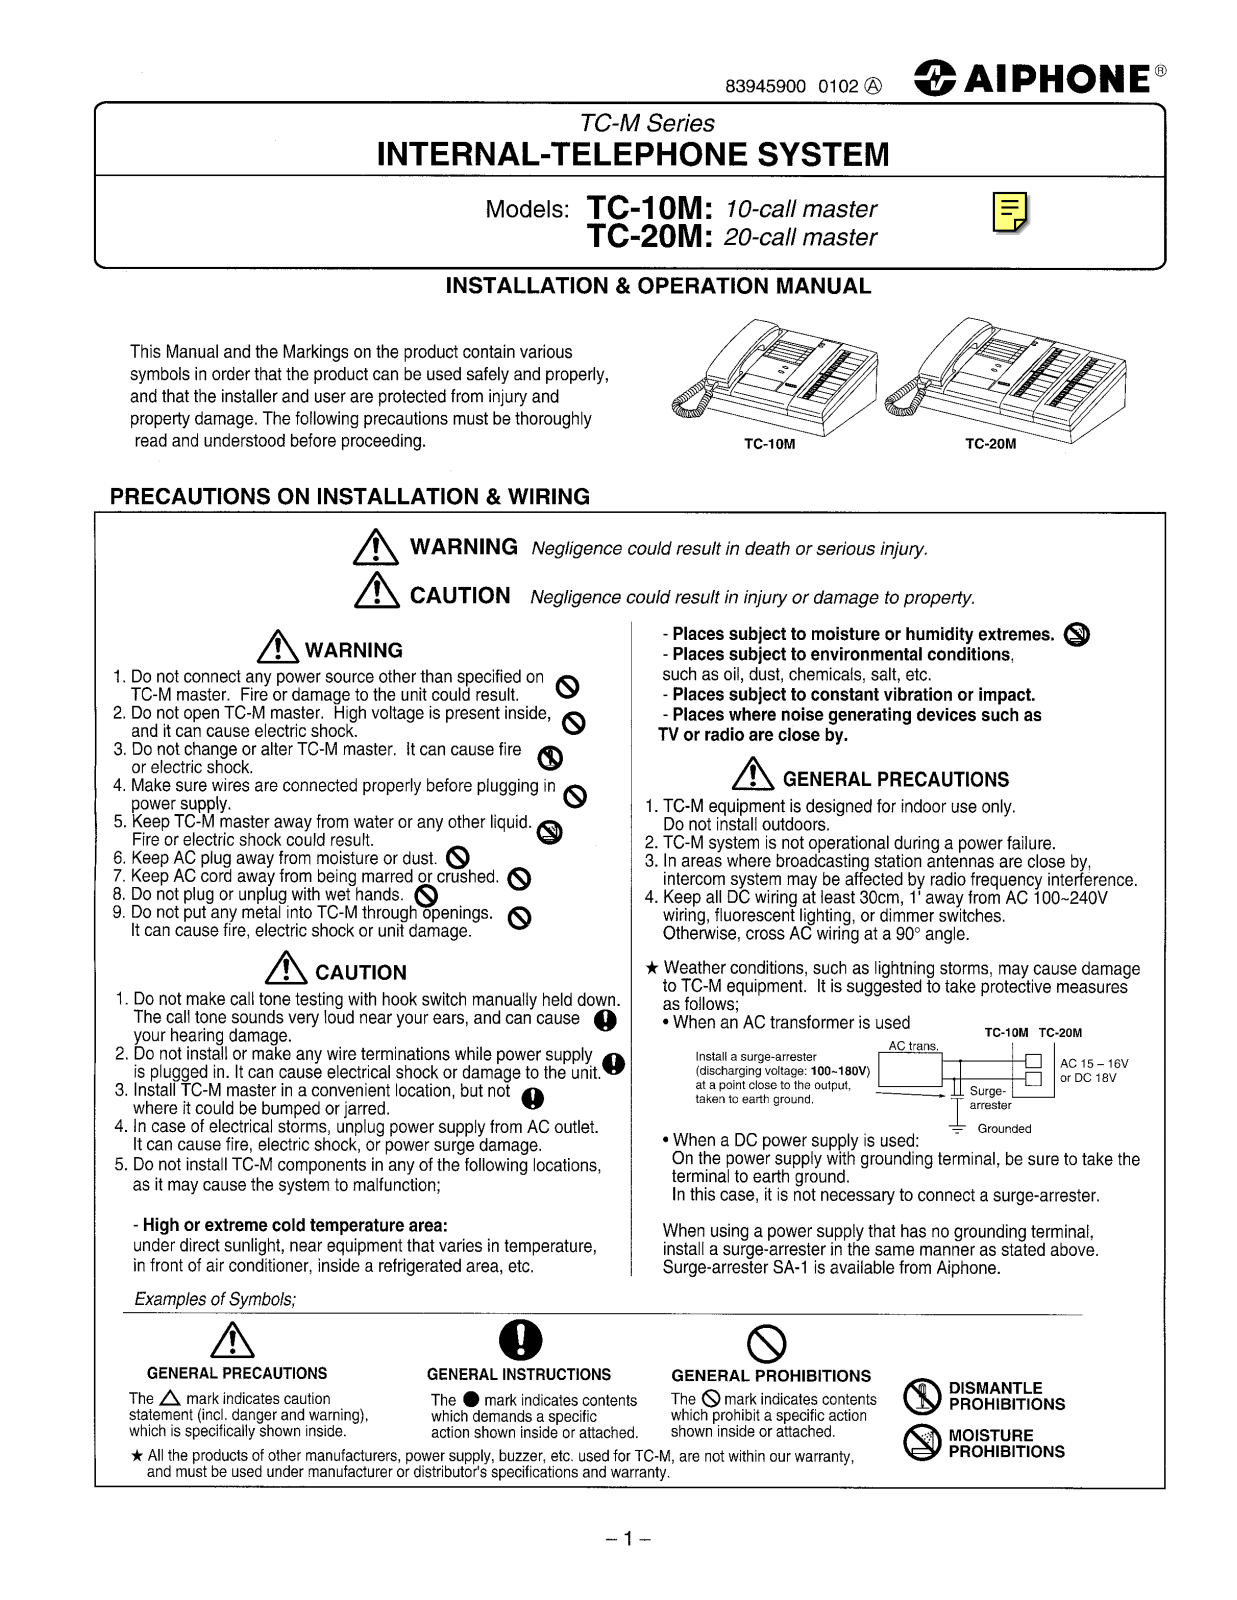 Aiphone TC-10M, TC-20M Installation and Operation Manual